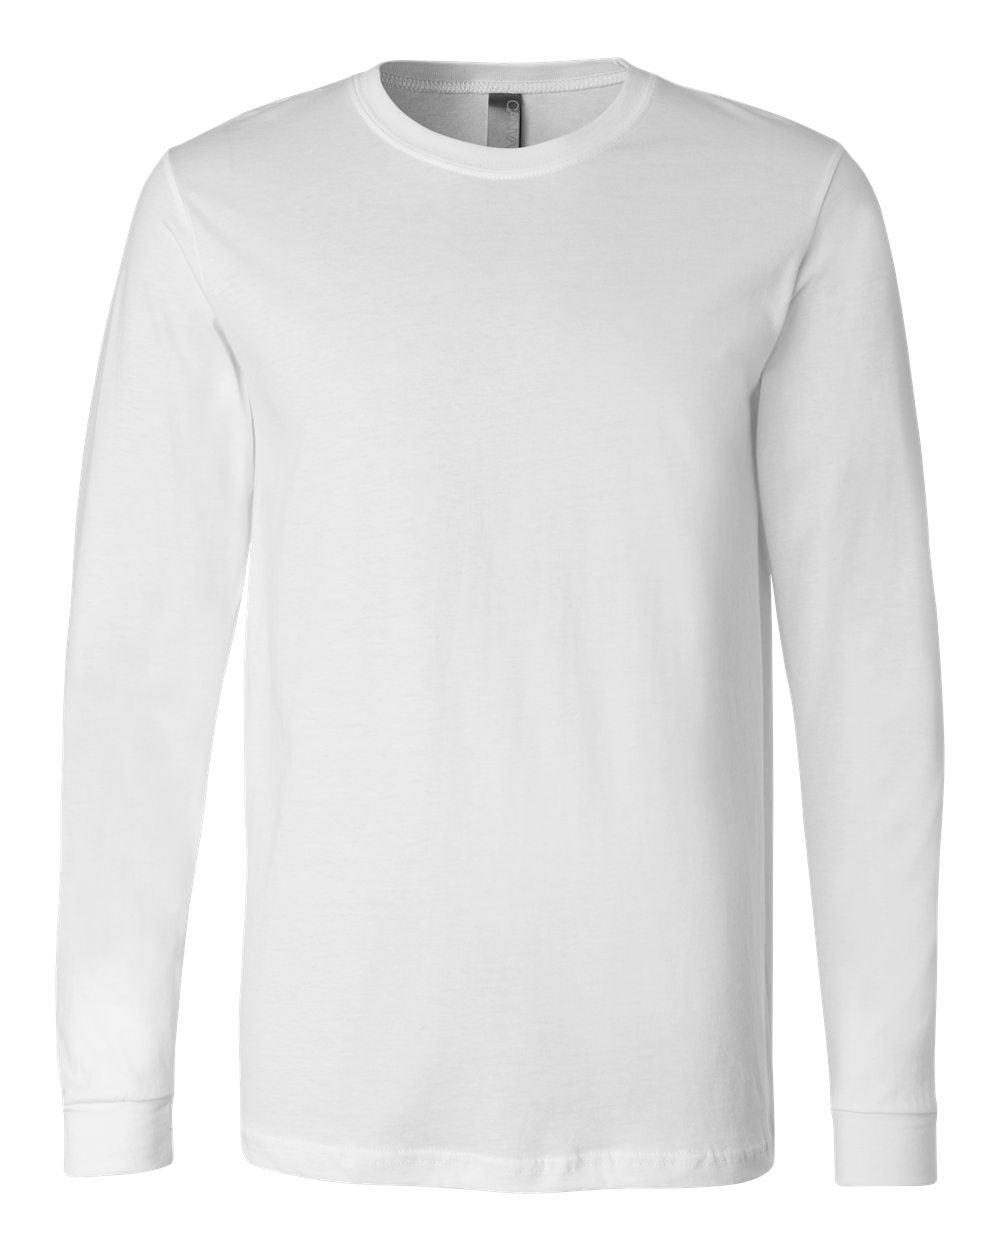 Cedar Mountain Design 11 Long Sleeve Shirt